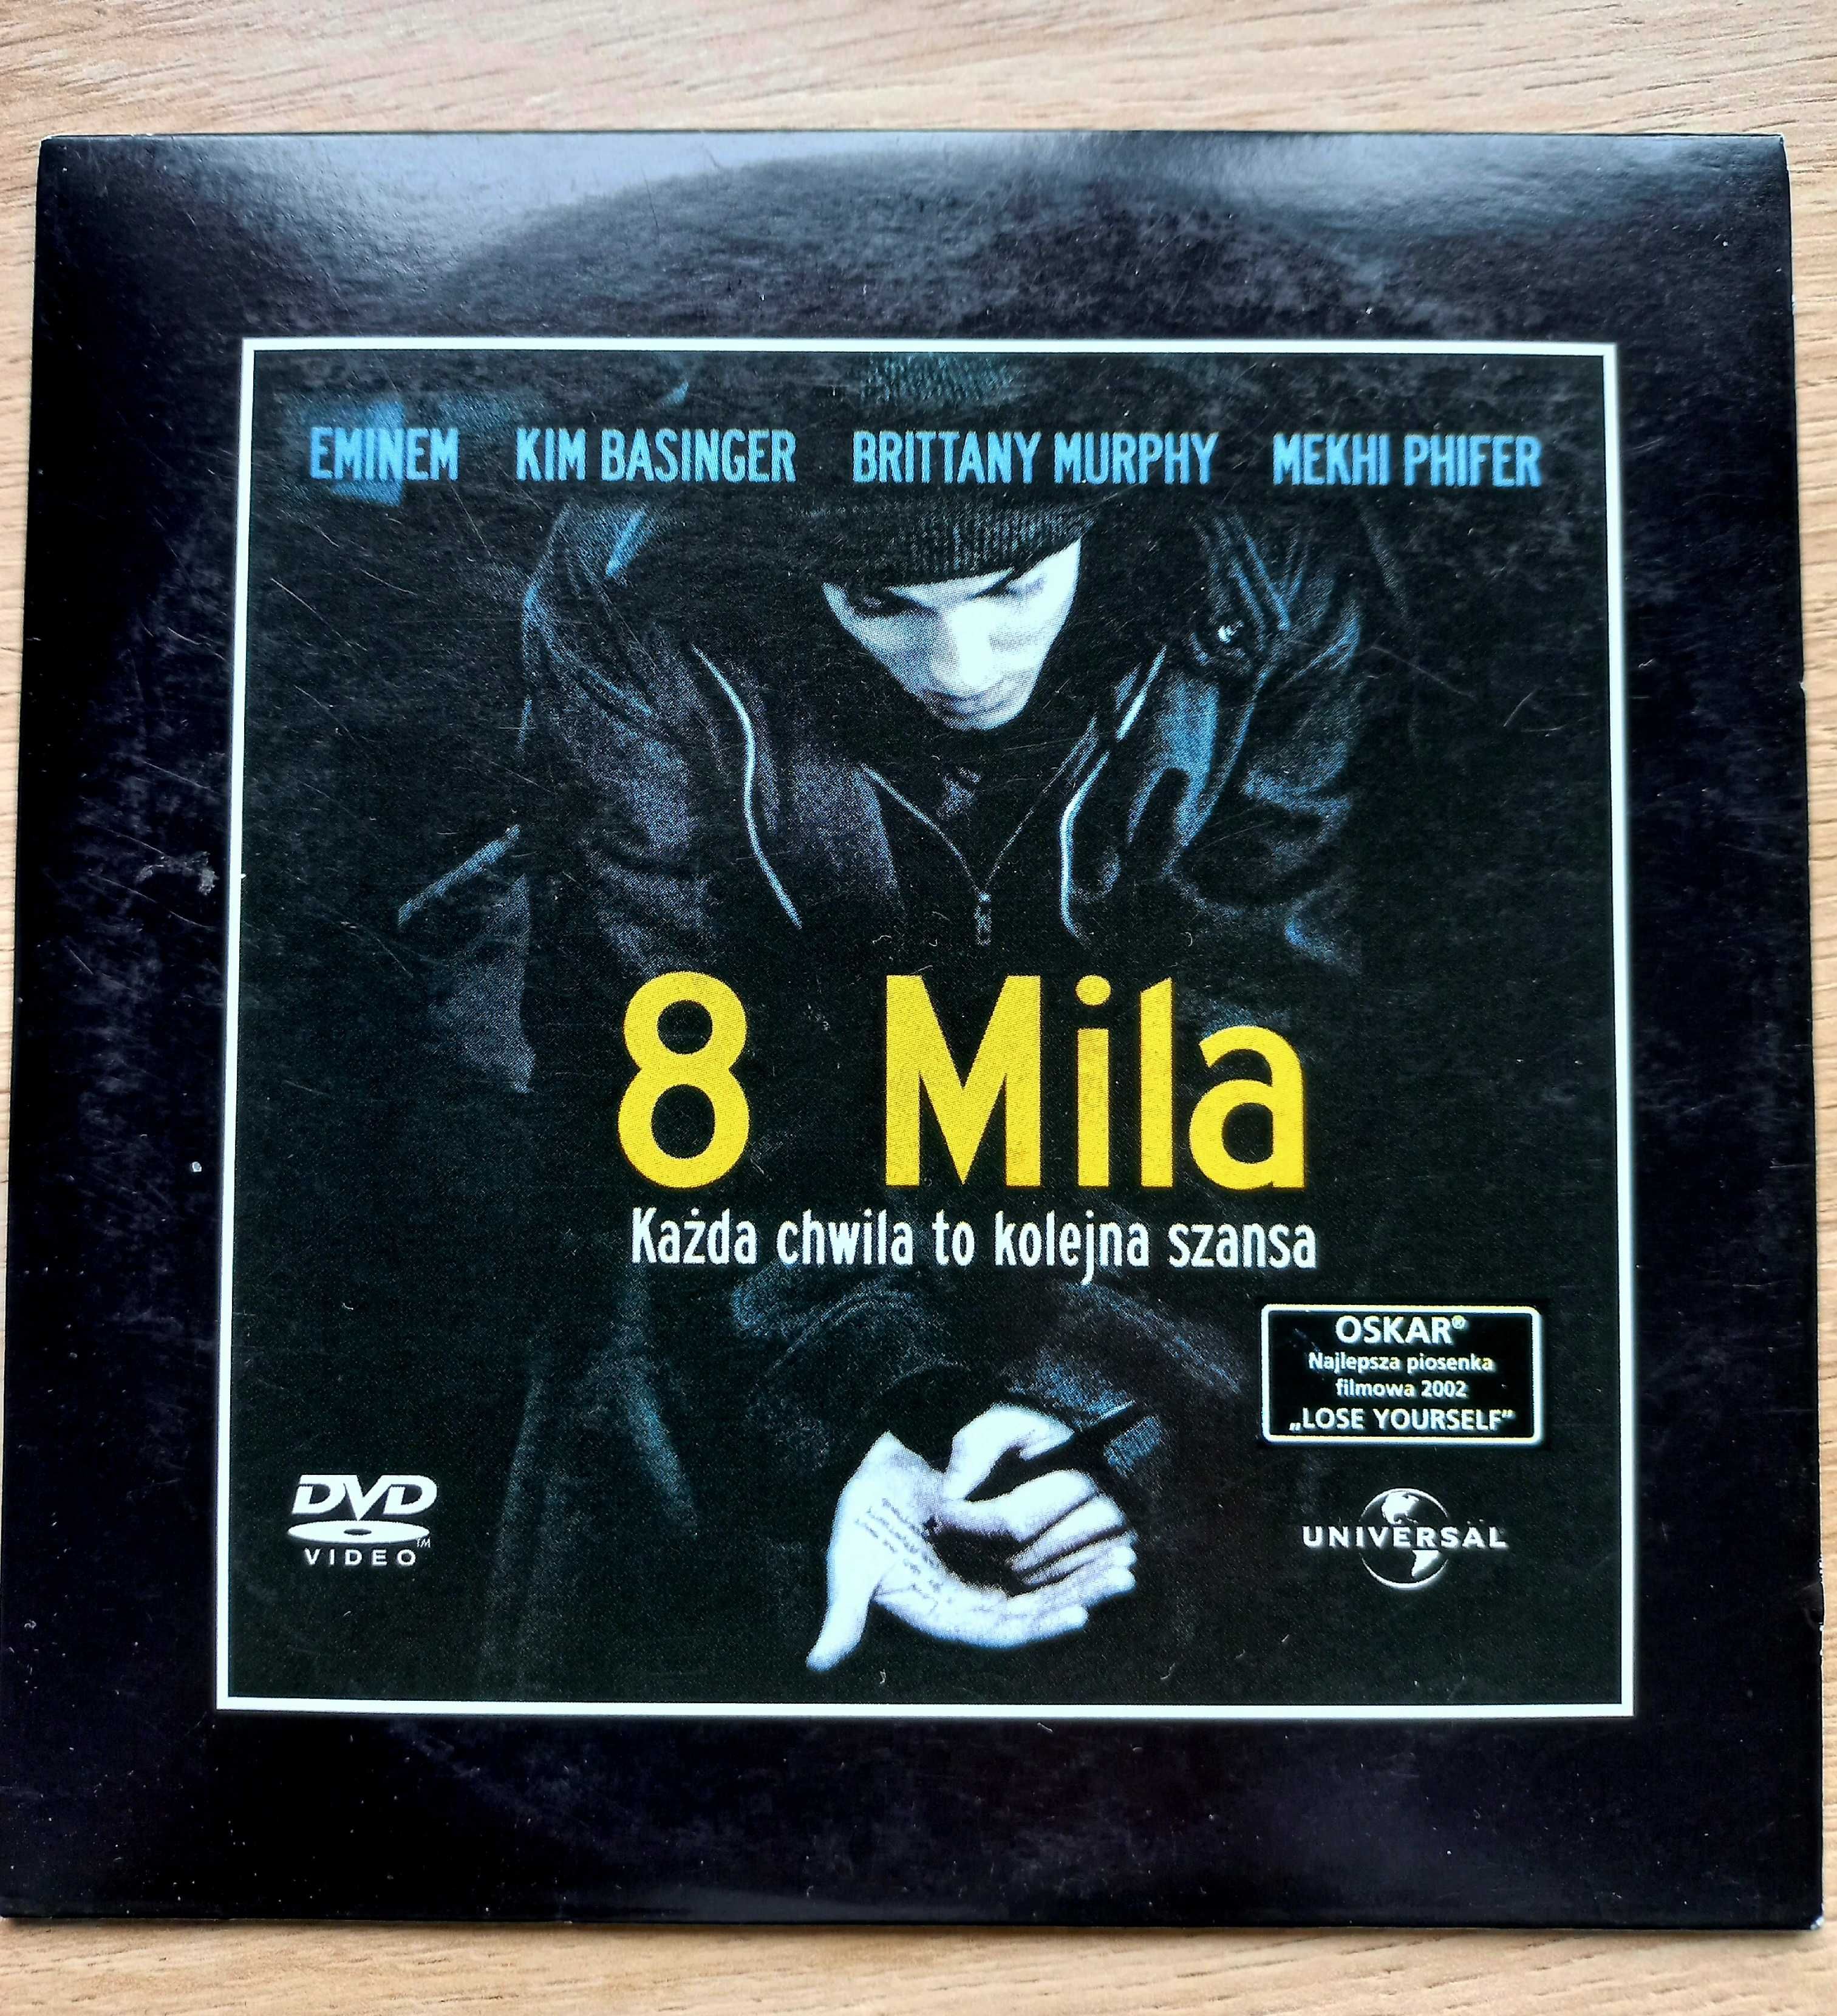 DVD "8 mila" Eminem